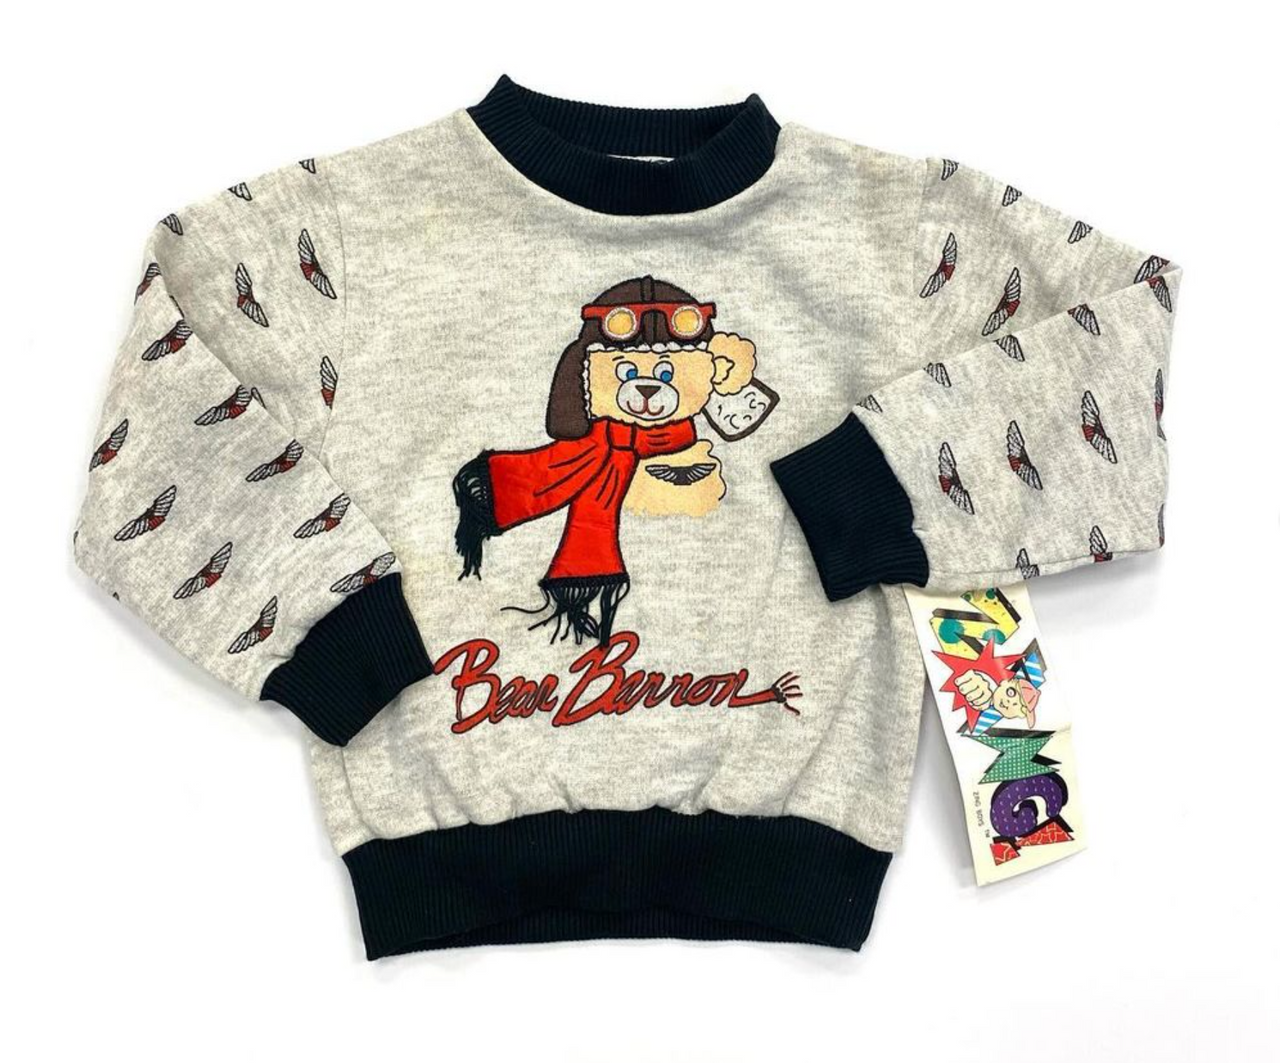 Apple Vintage - Apparel - ZING Bear Barron Sweater